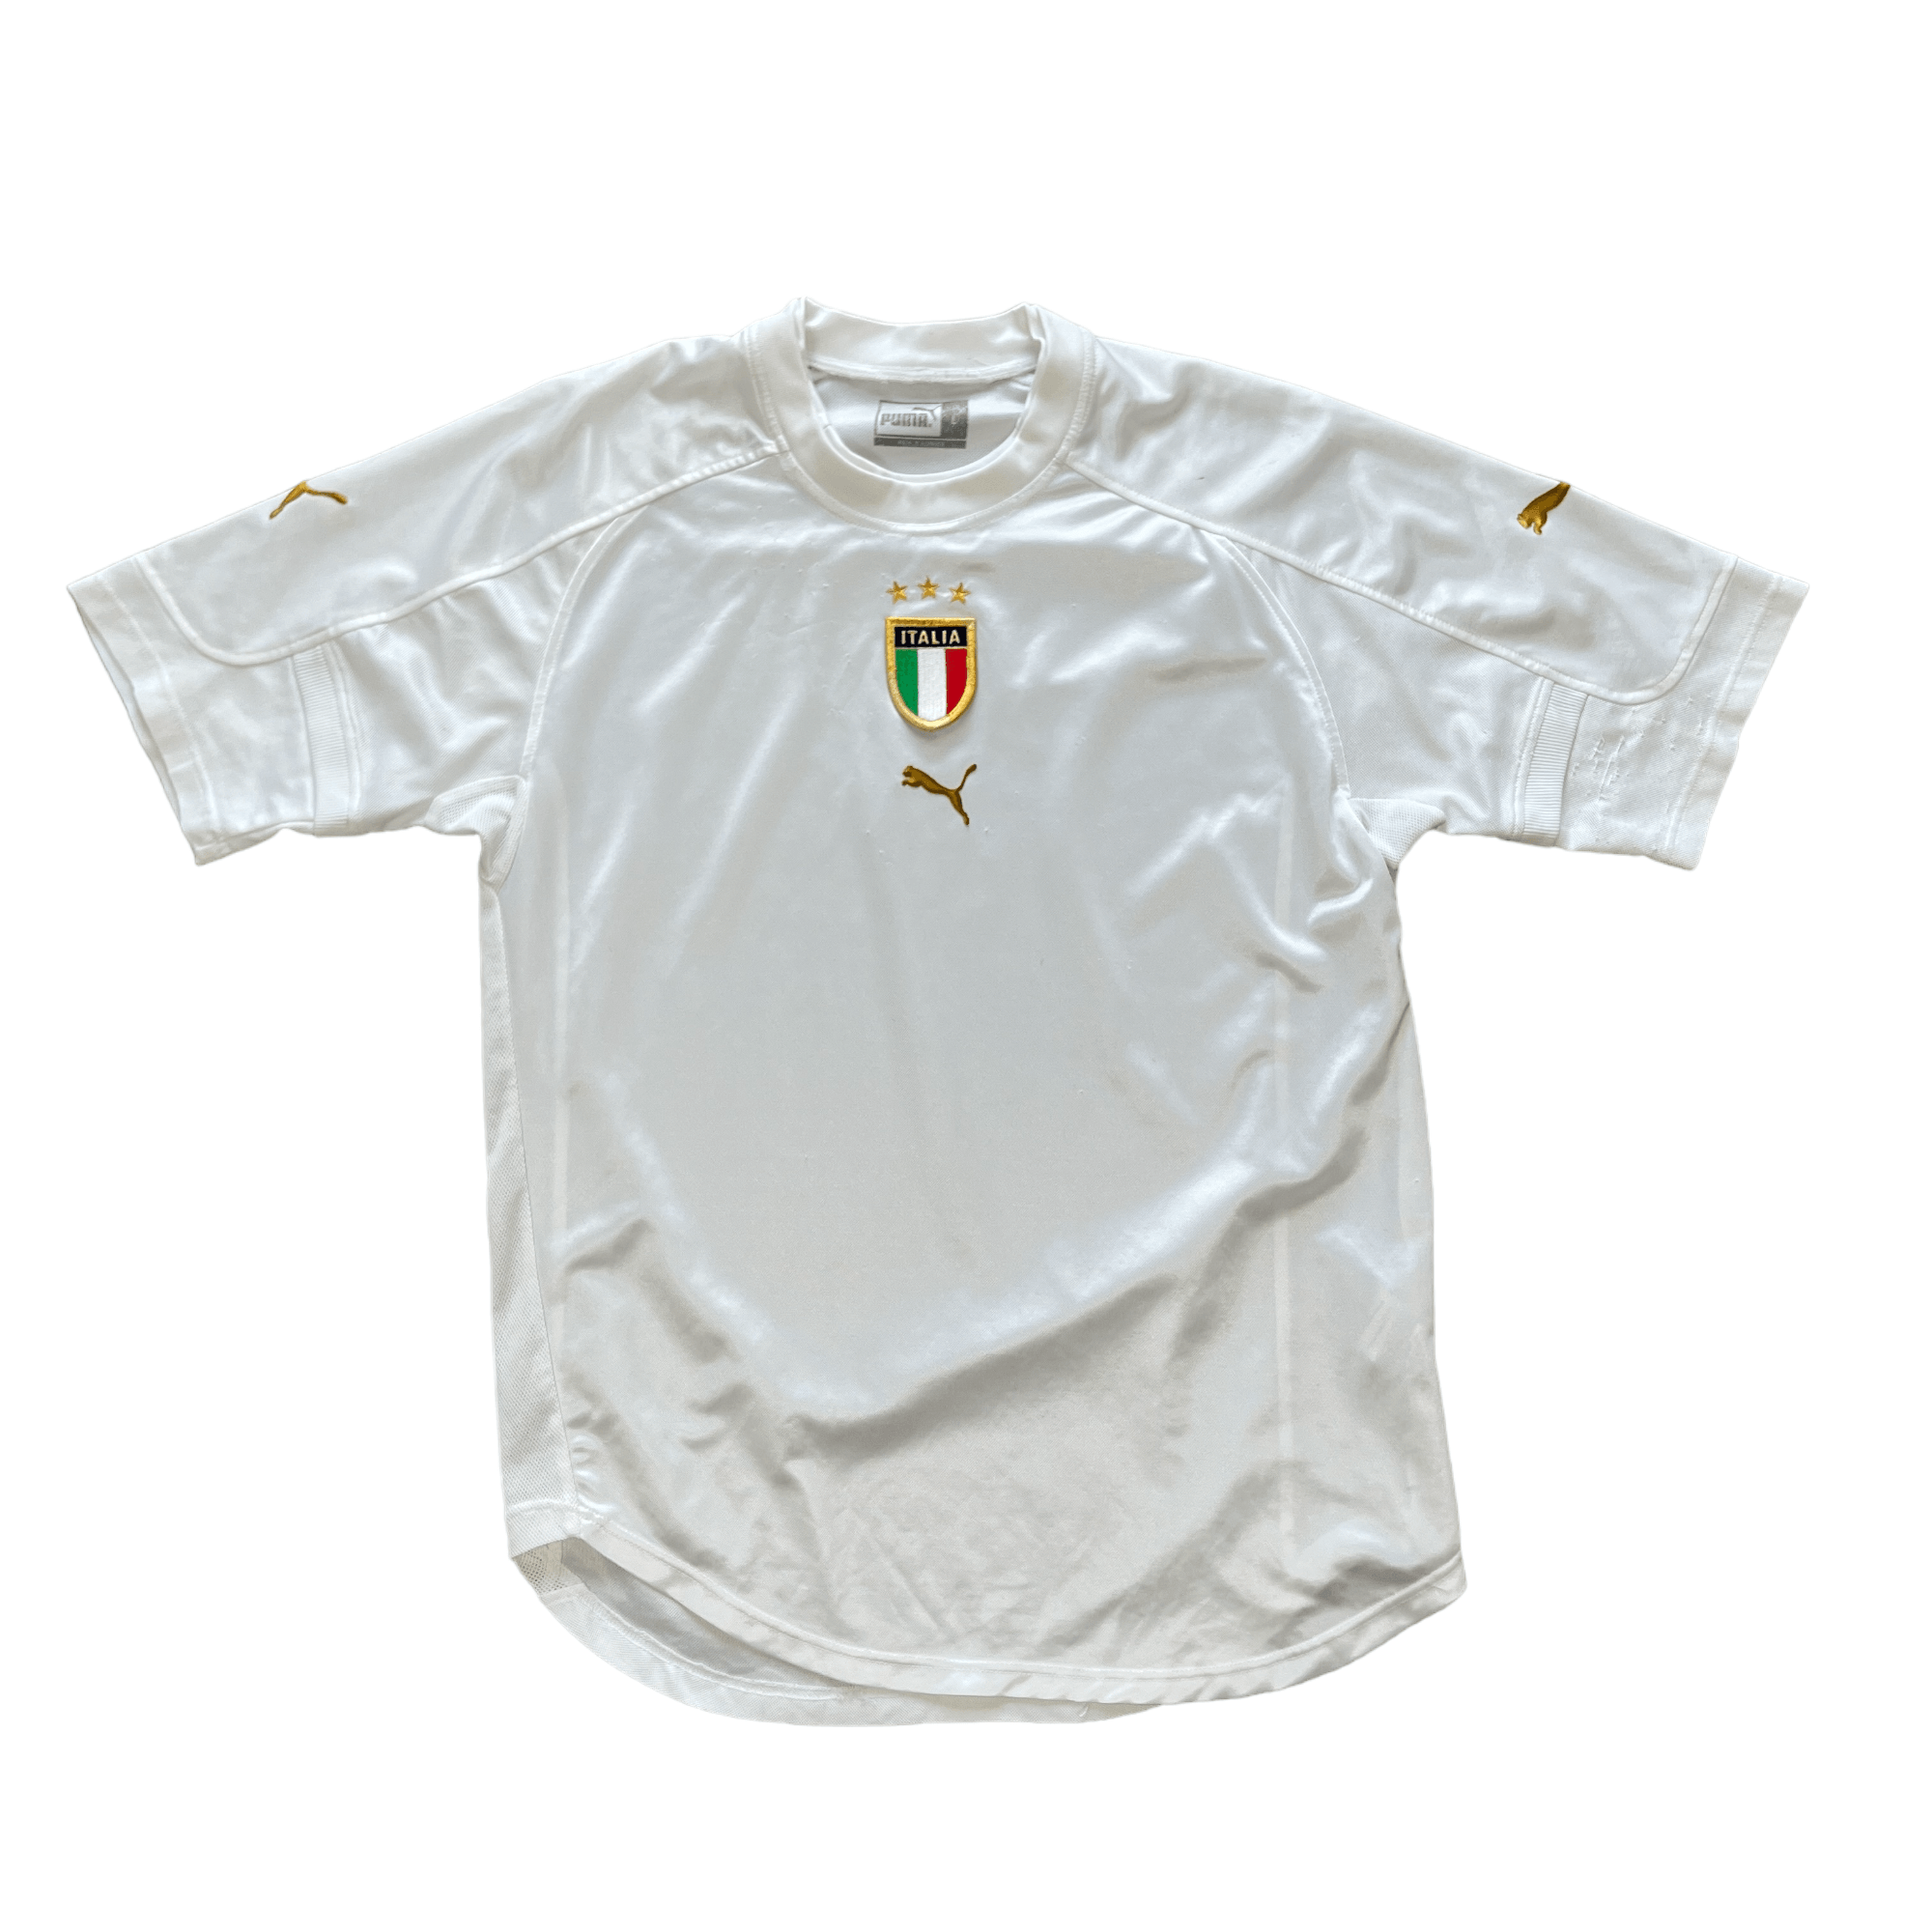 2004-06 White Puma Italy Away Shirt - Large - The Streetwear Studio